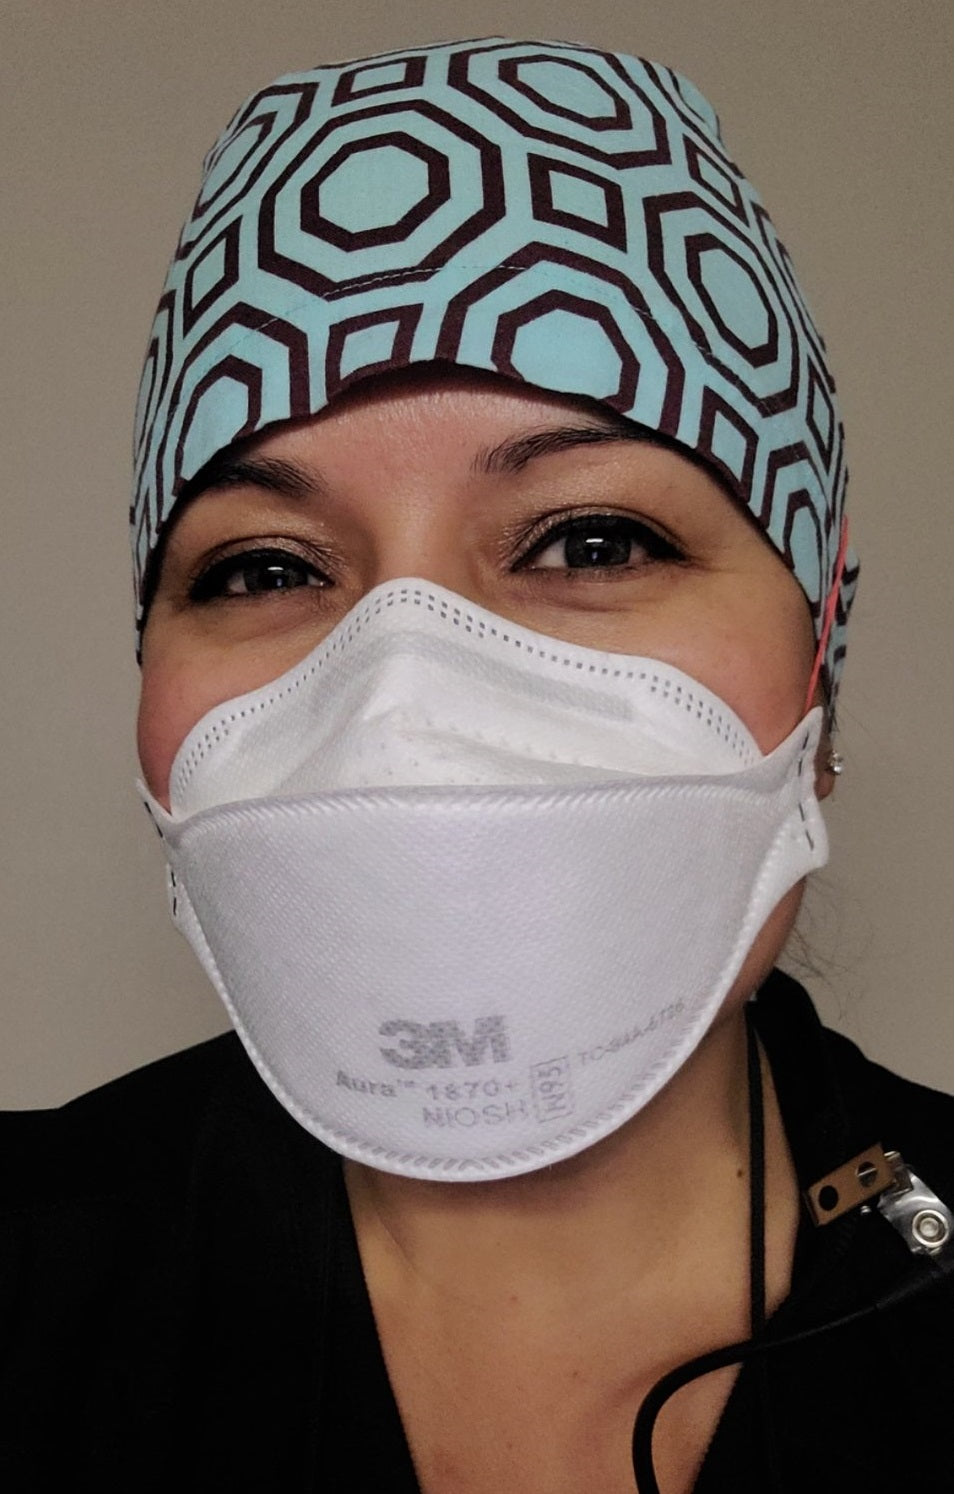 3M N95 1870 respirator mask worn by woman dental healthcare worker